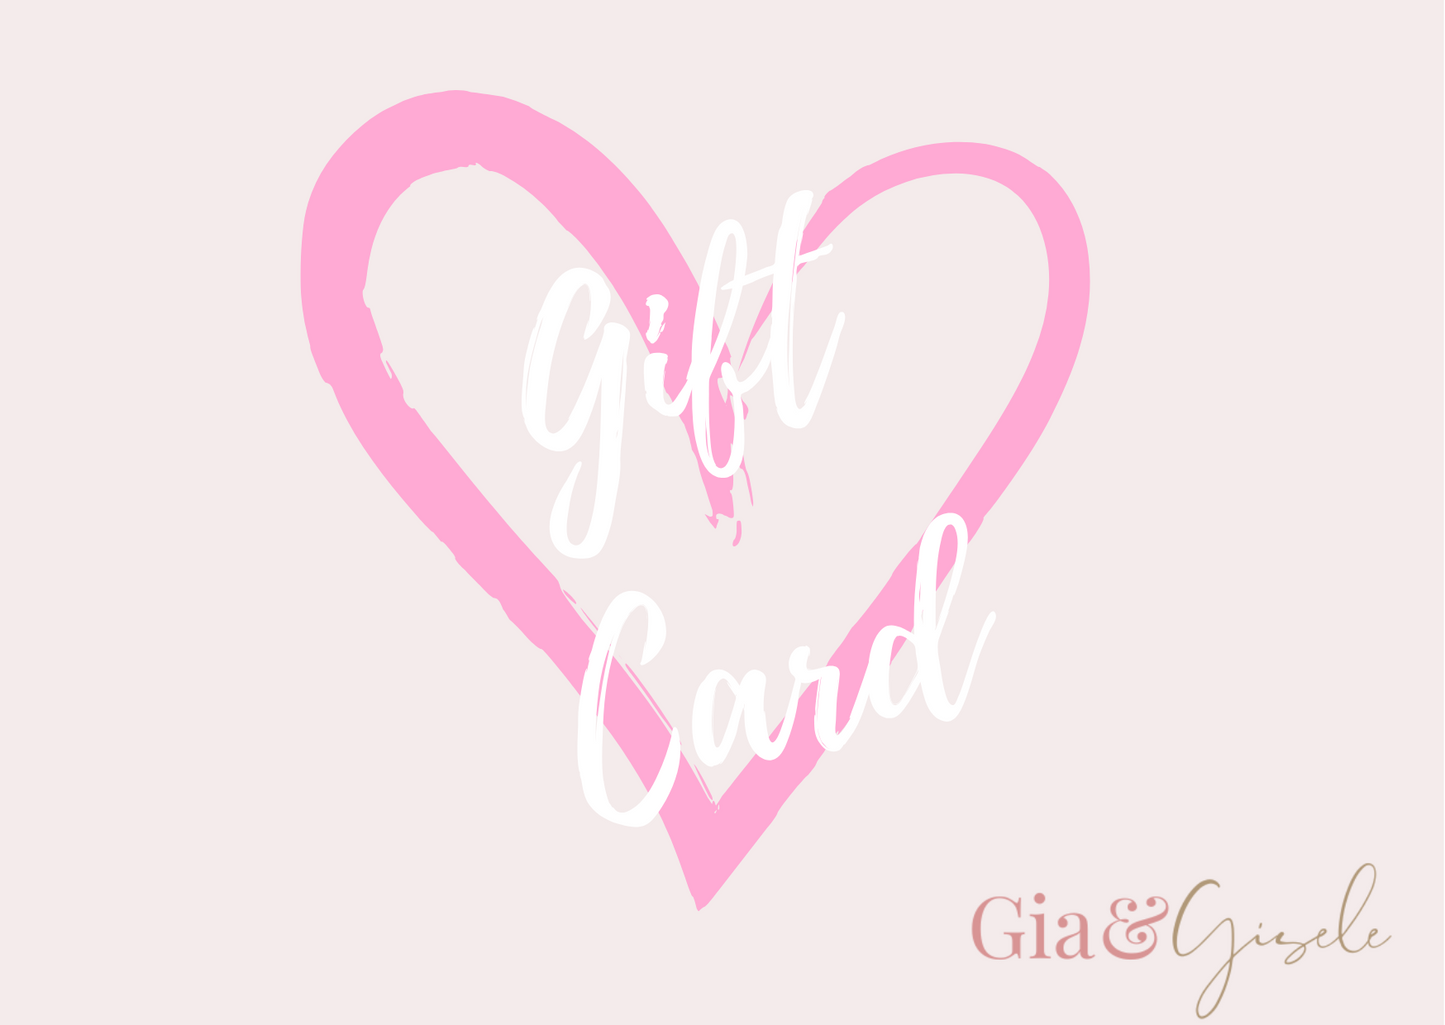 Gia & Gisele Gift Card